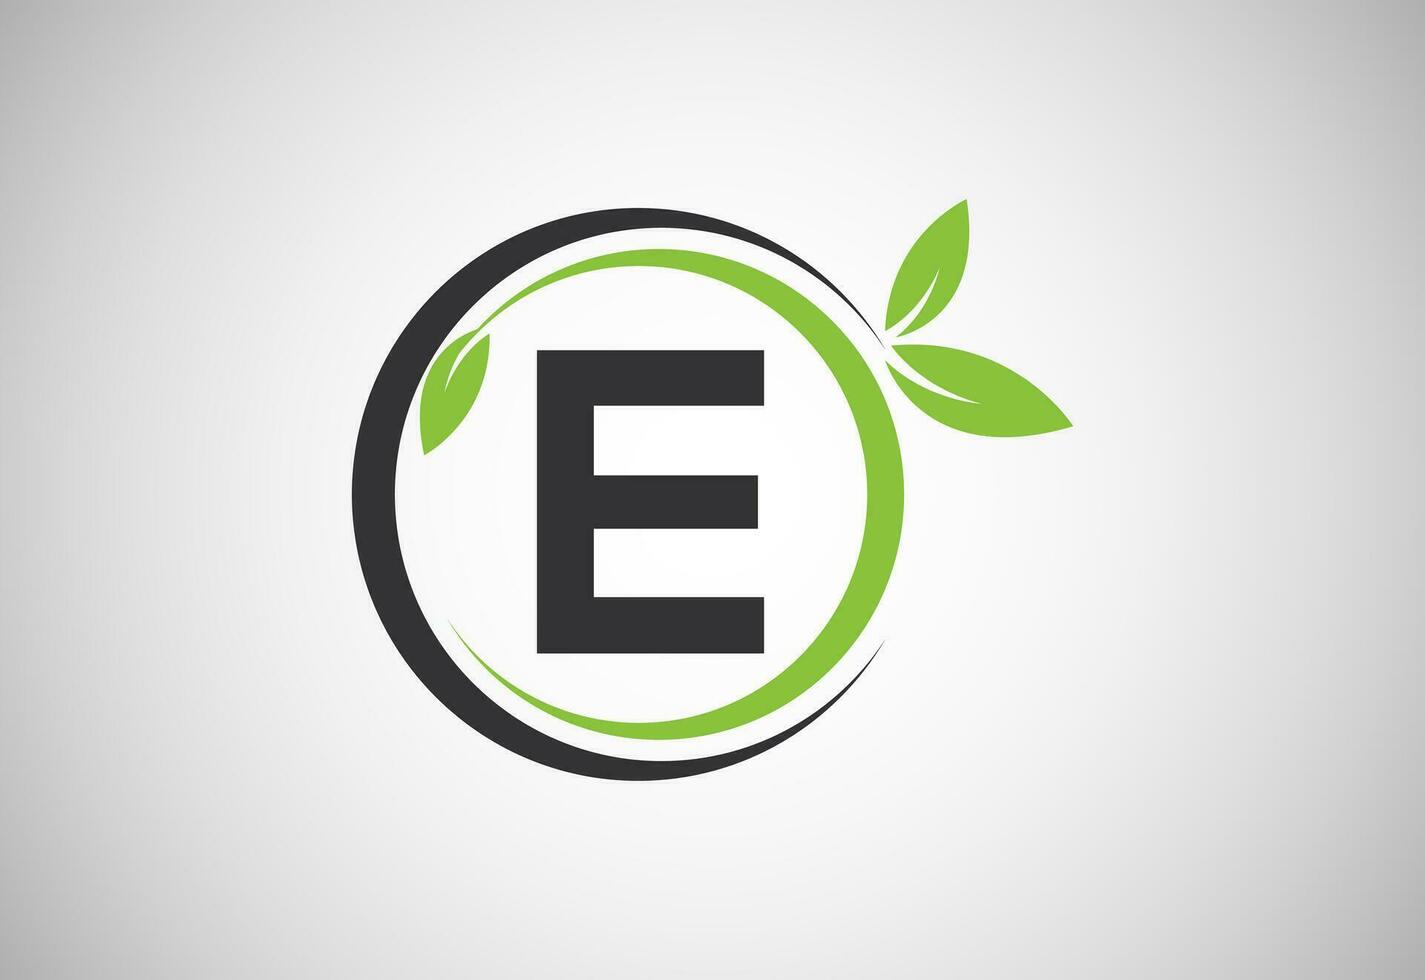 English alphabet E with green leaves. Organic, eco-friendly logo design vector template